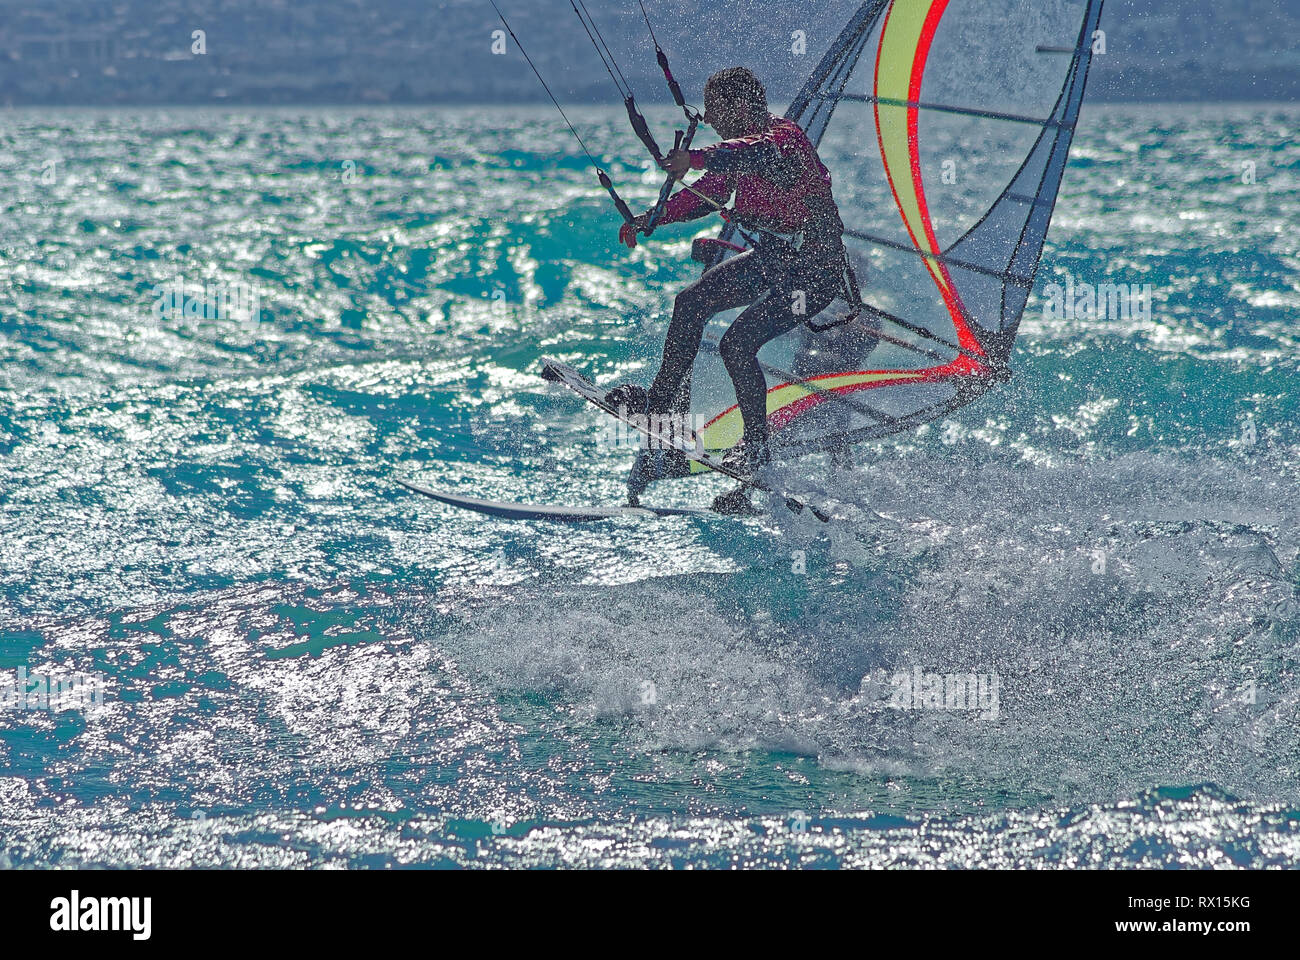 Kiteboarder vs windsurfer  in mediterranean sea during a windy day Stock Photo